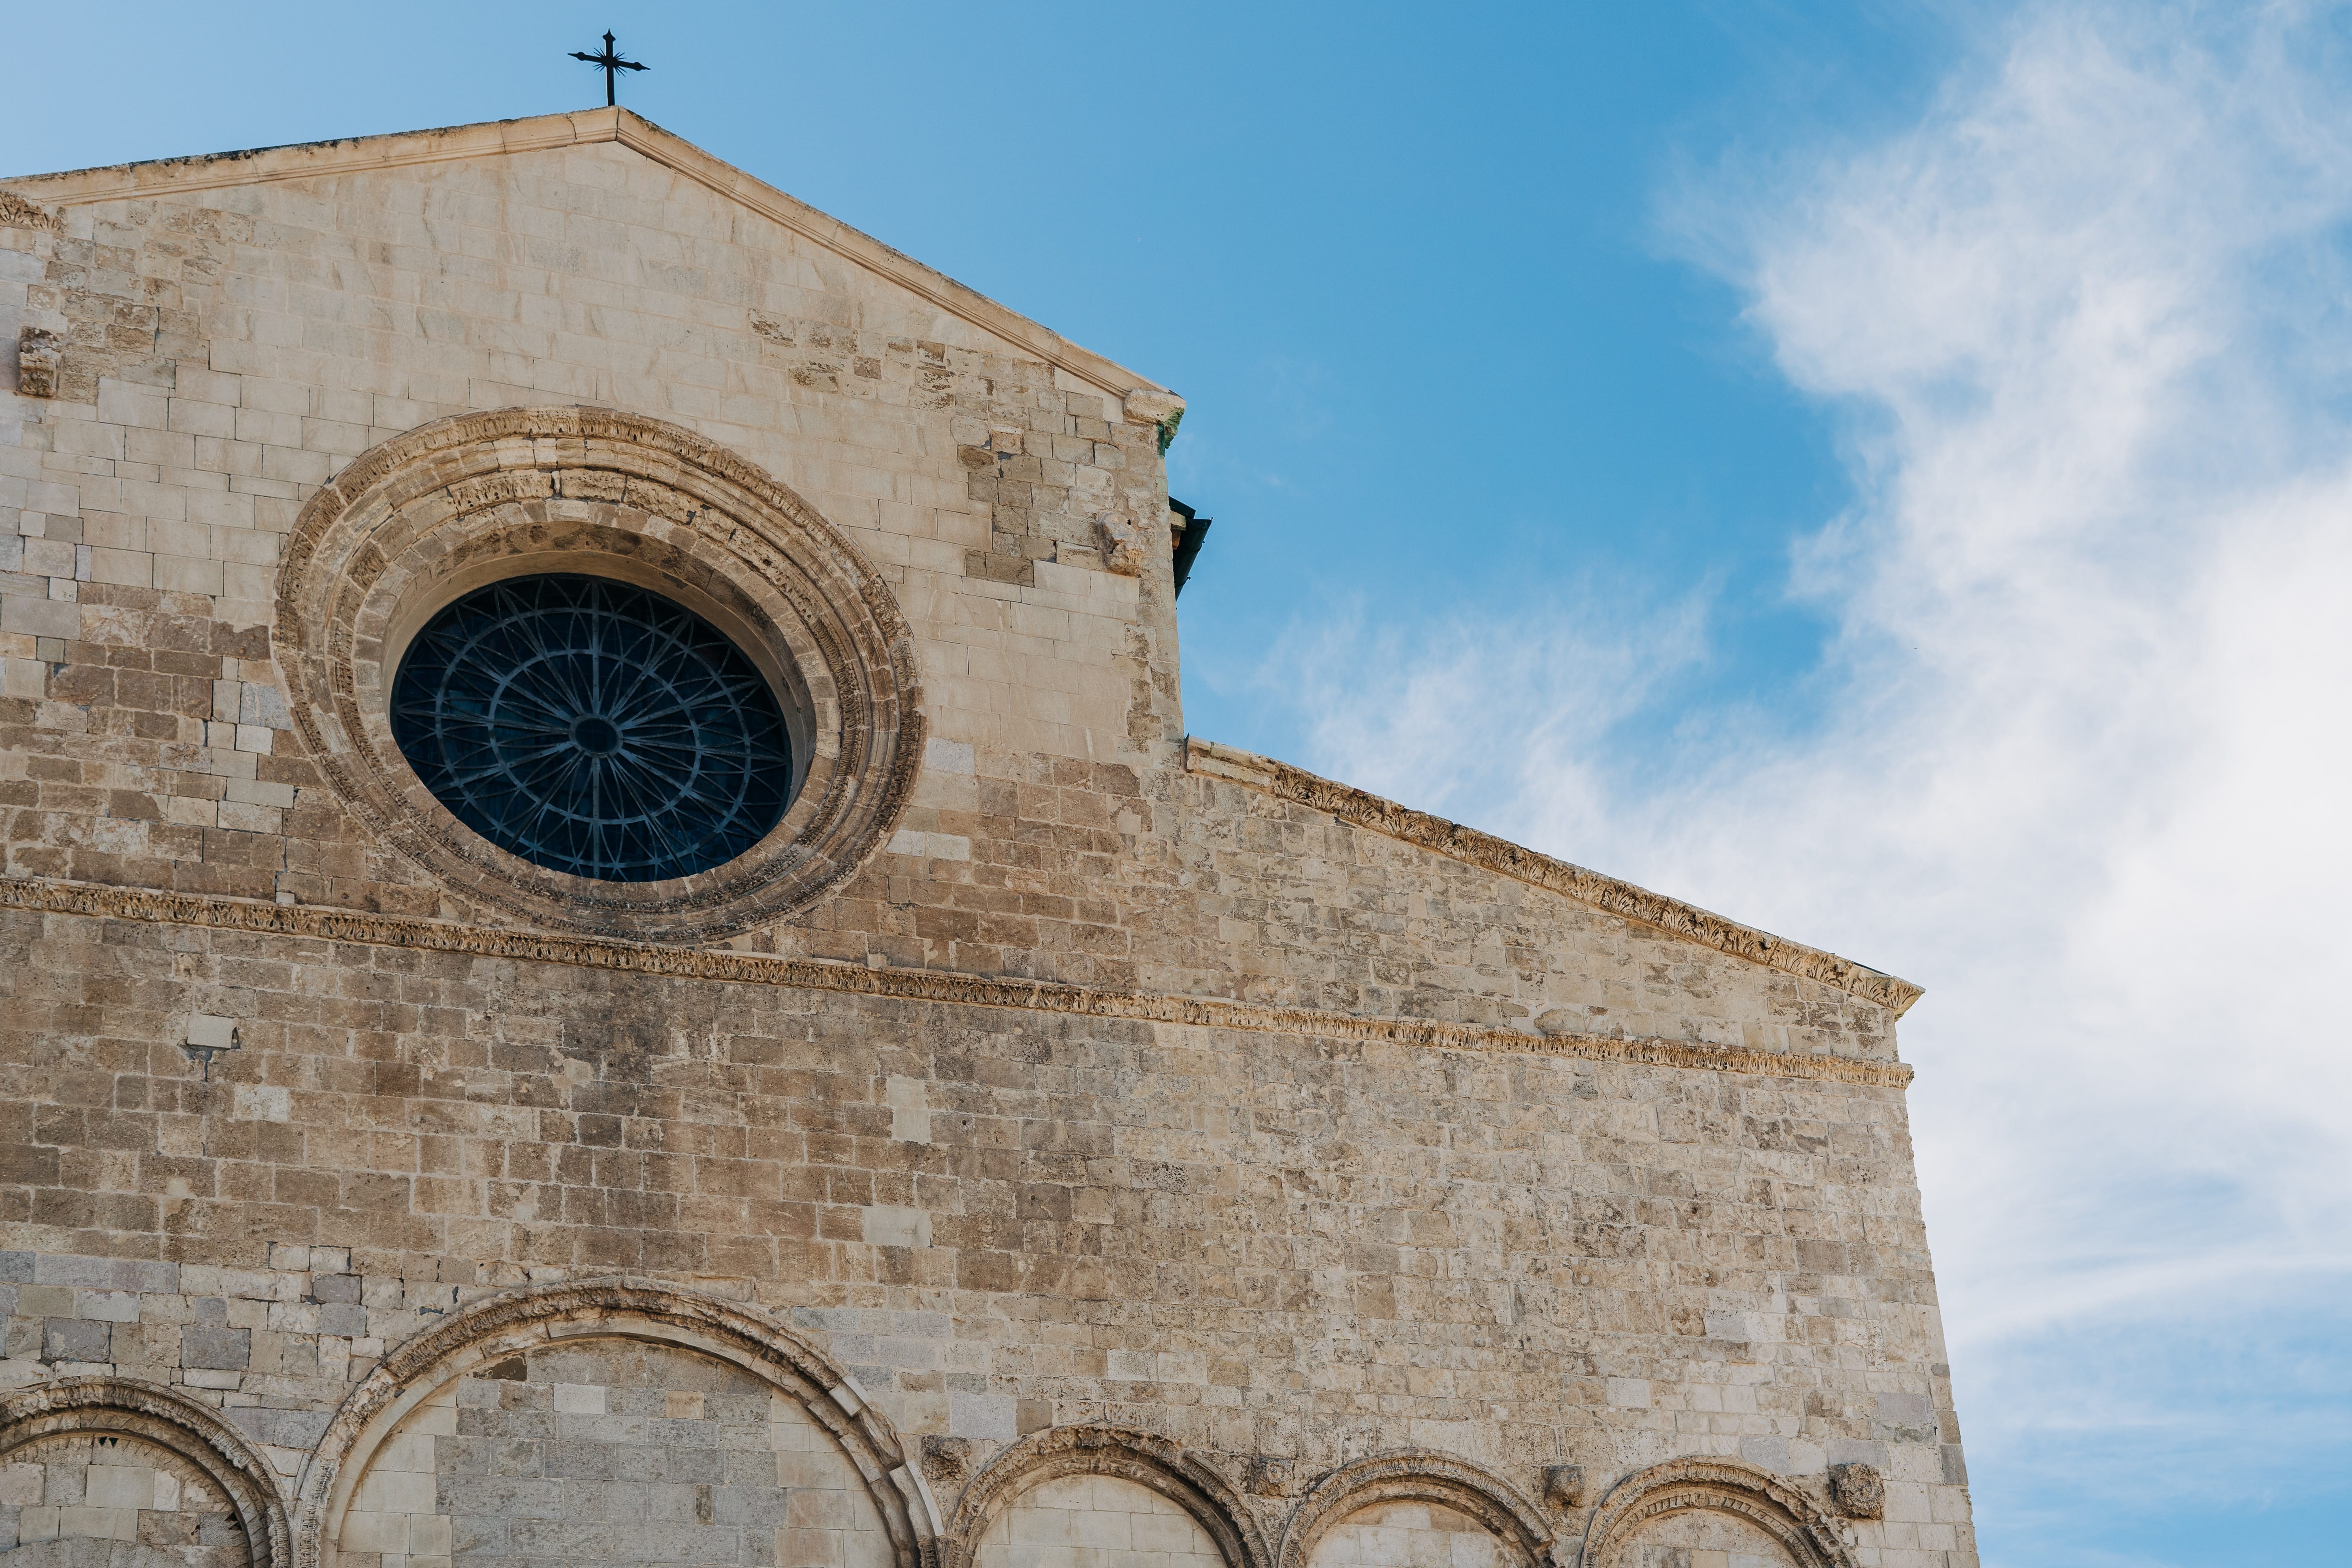 A Catholic church in the town of Termoli, Molise, Italy